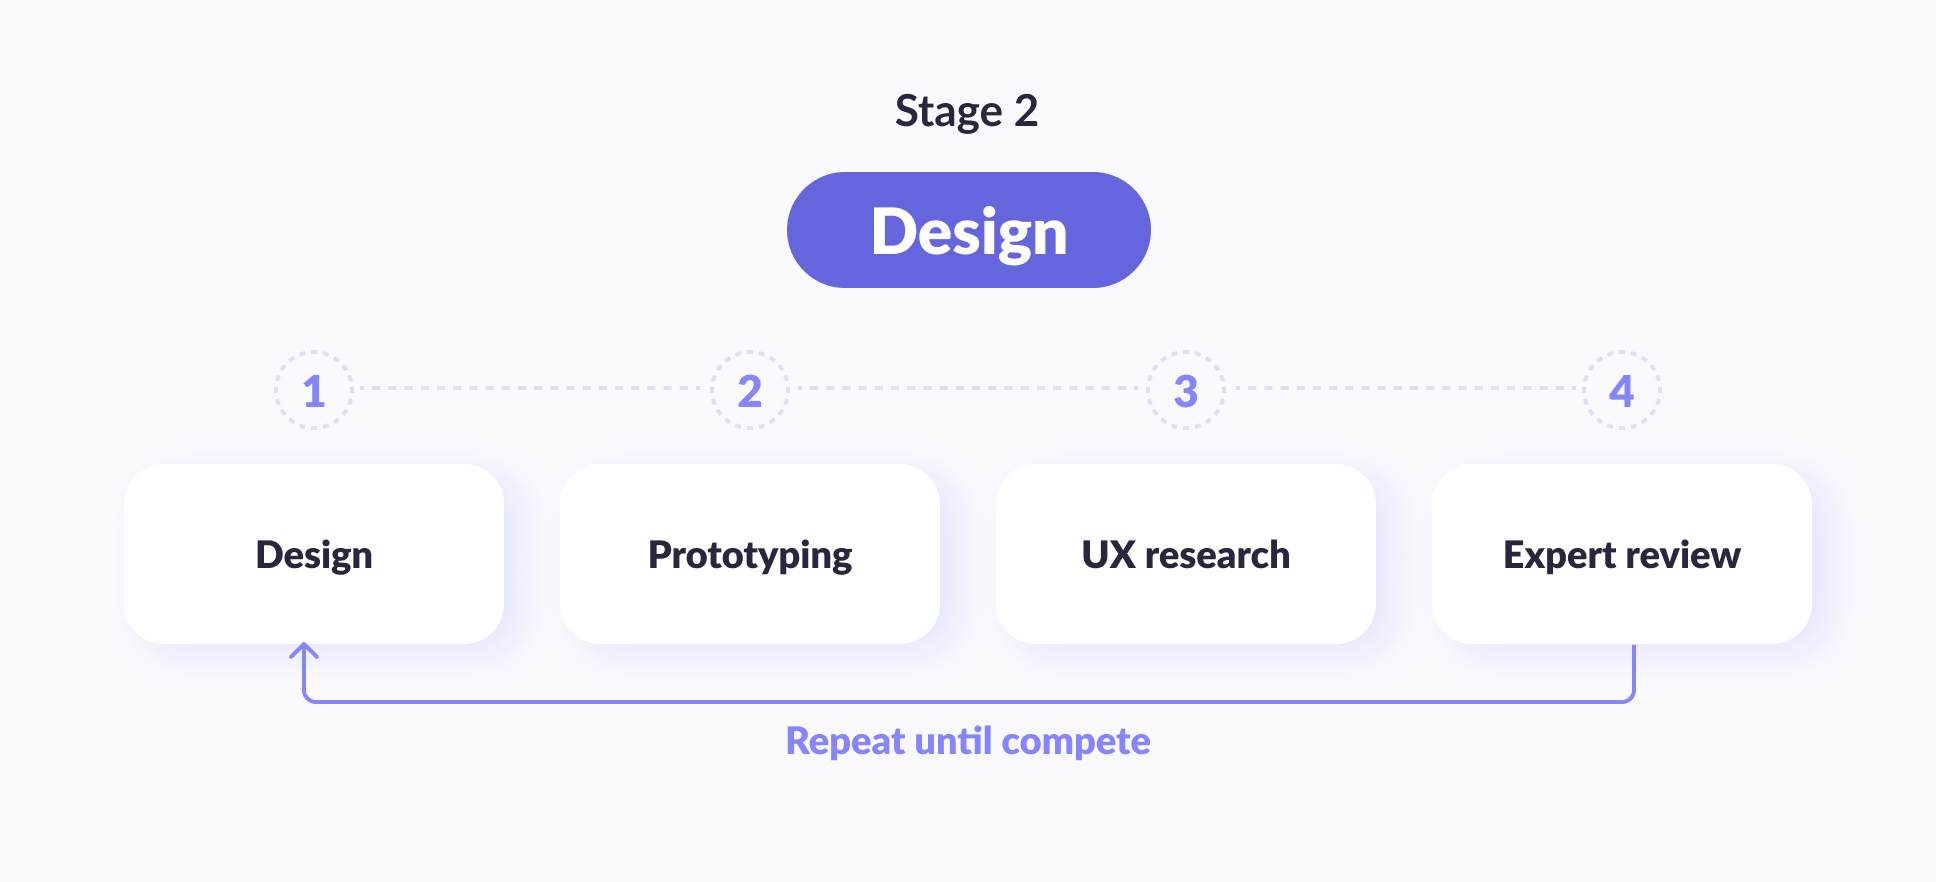 Design stage